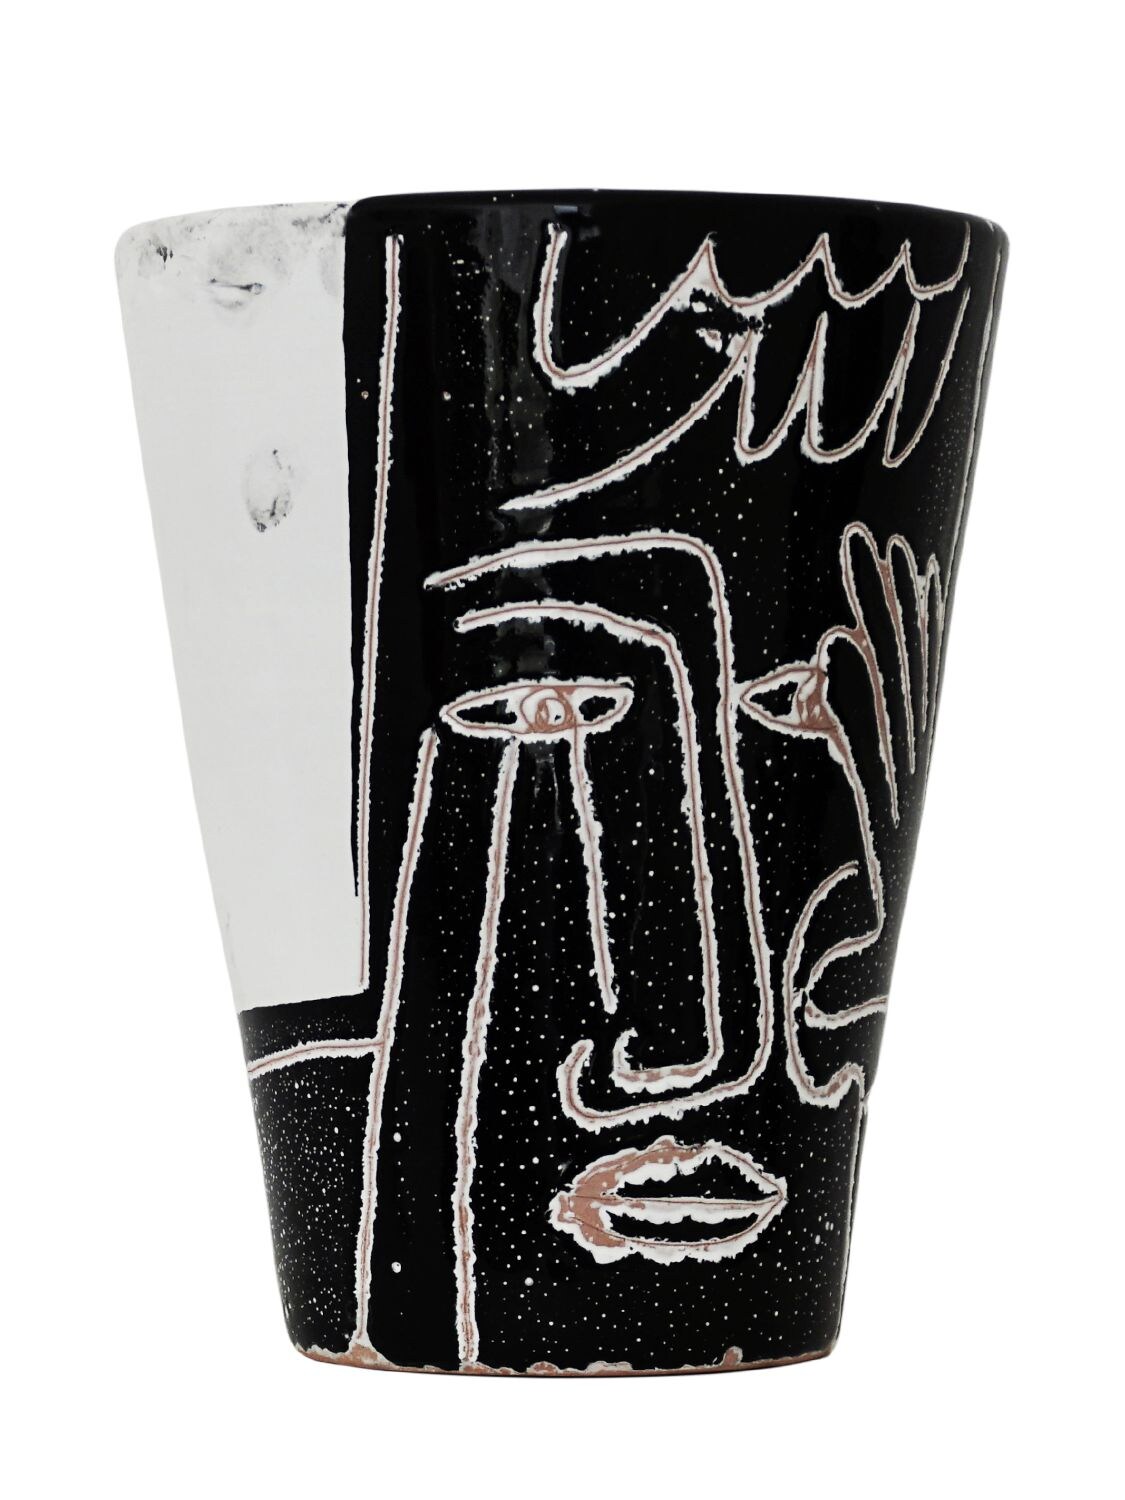 Antonio Marras + Kiasmo Vaso Pezzo Unico 4 Ceramic Vase In Multicolor